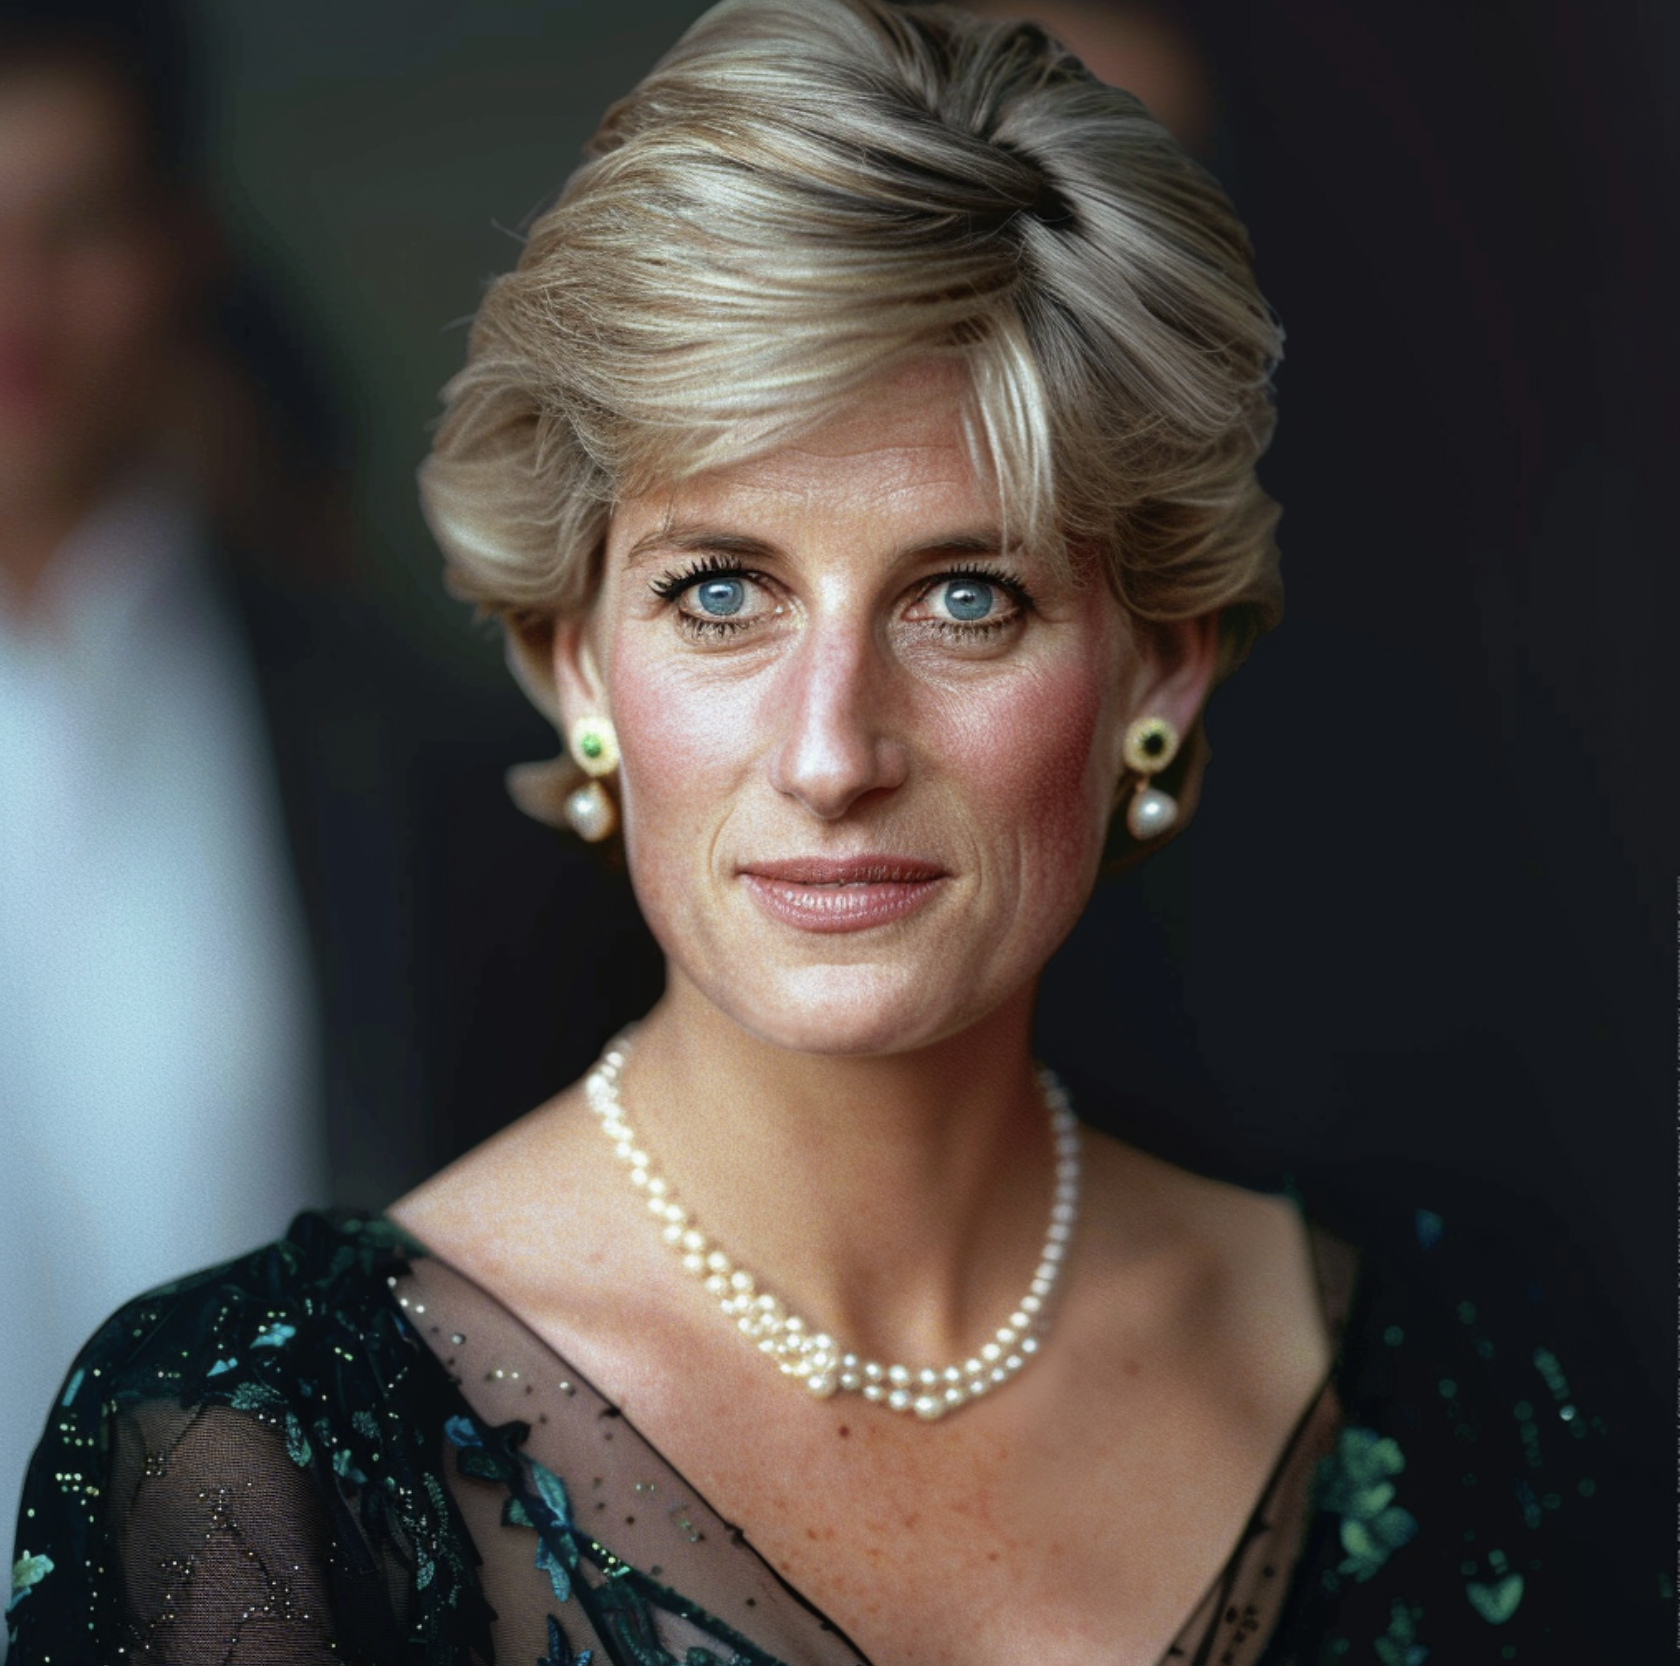 Image IA de la princesse Diana dans sa vieillesse | Source : Midjourney